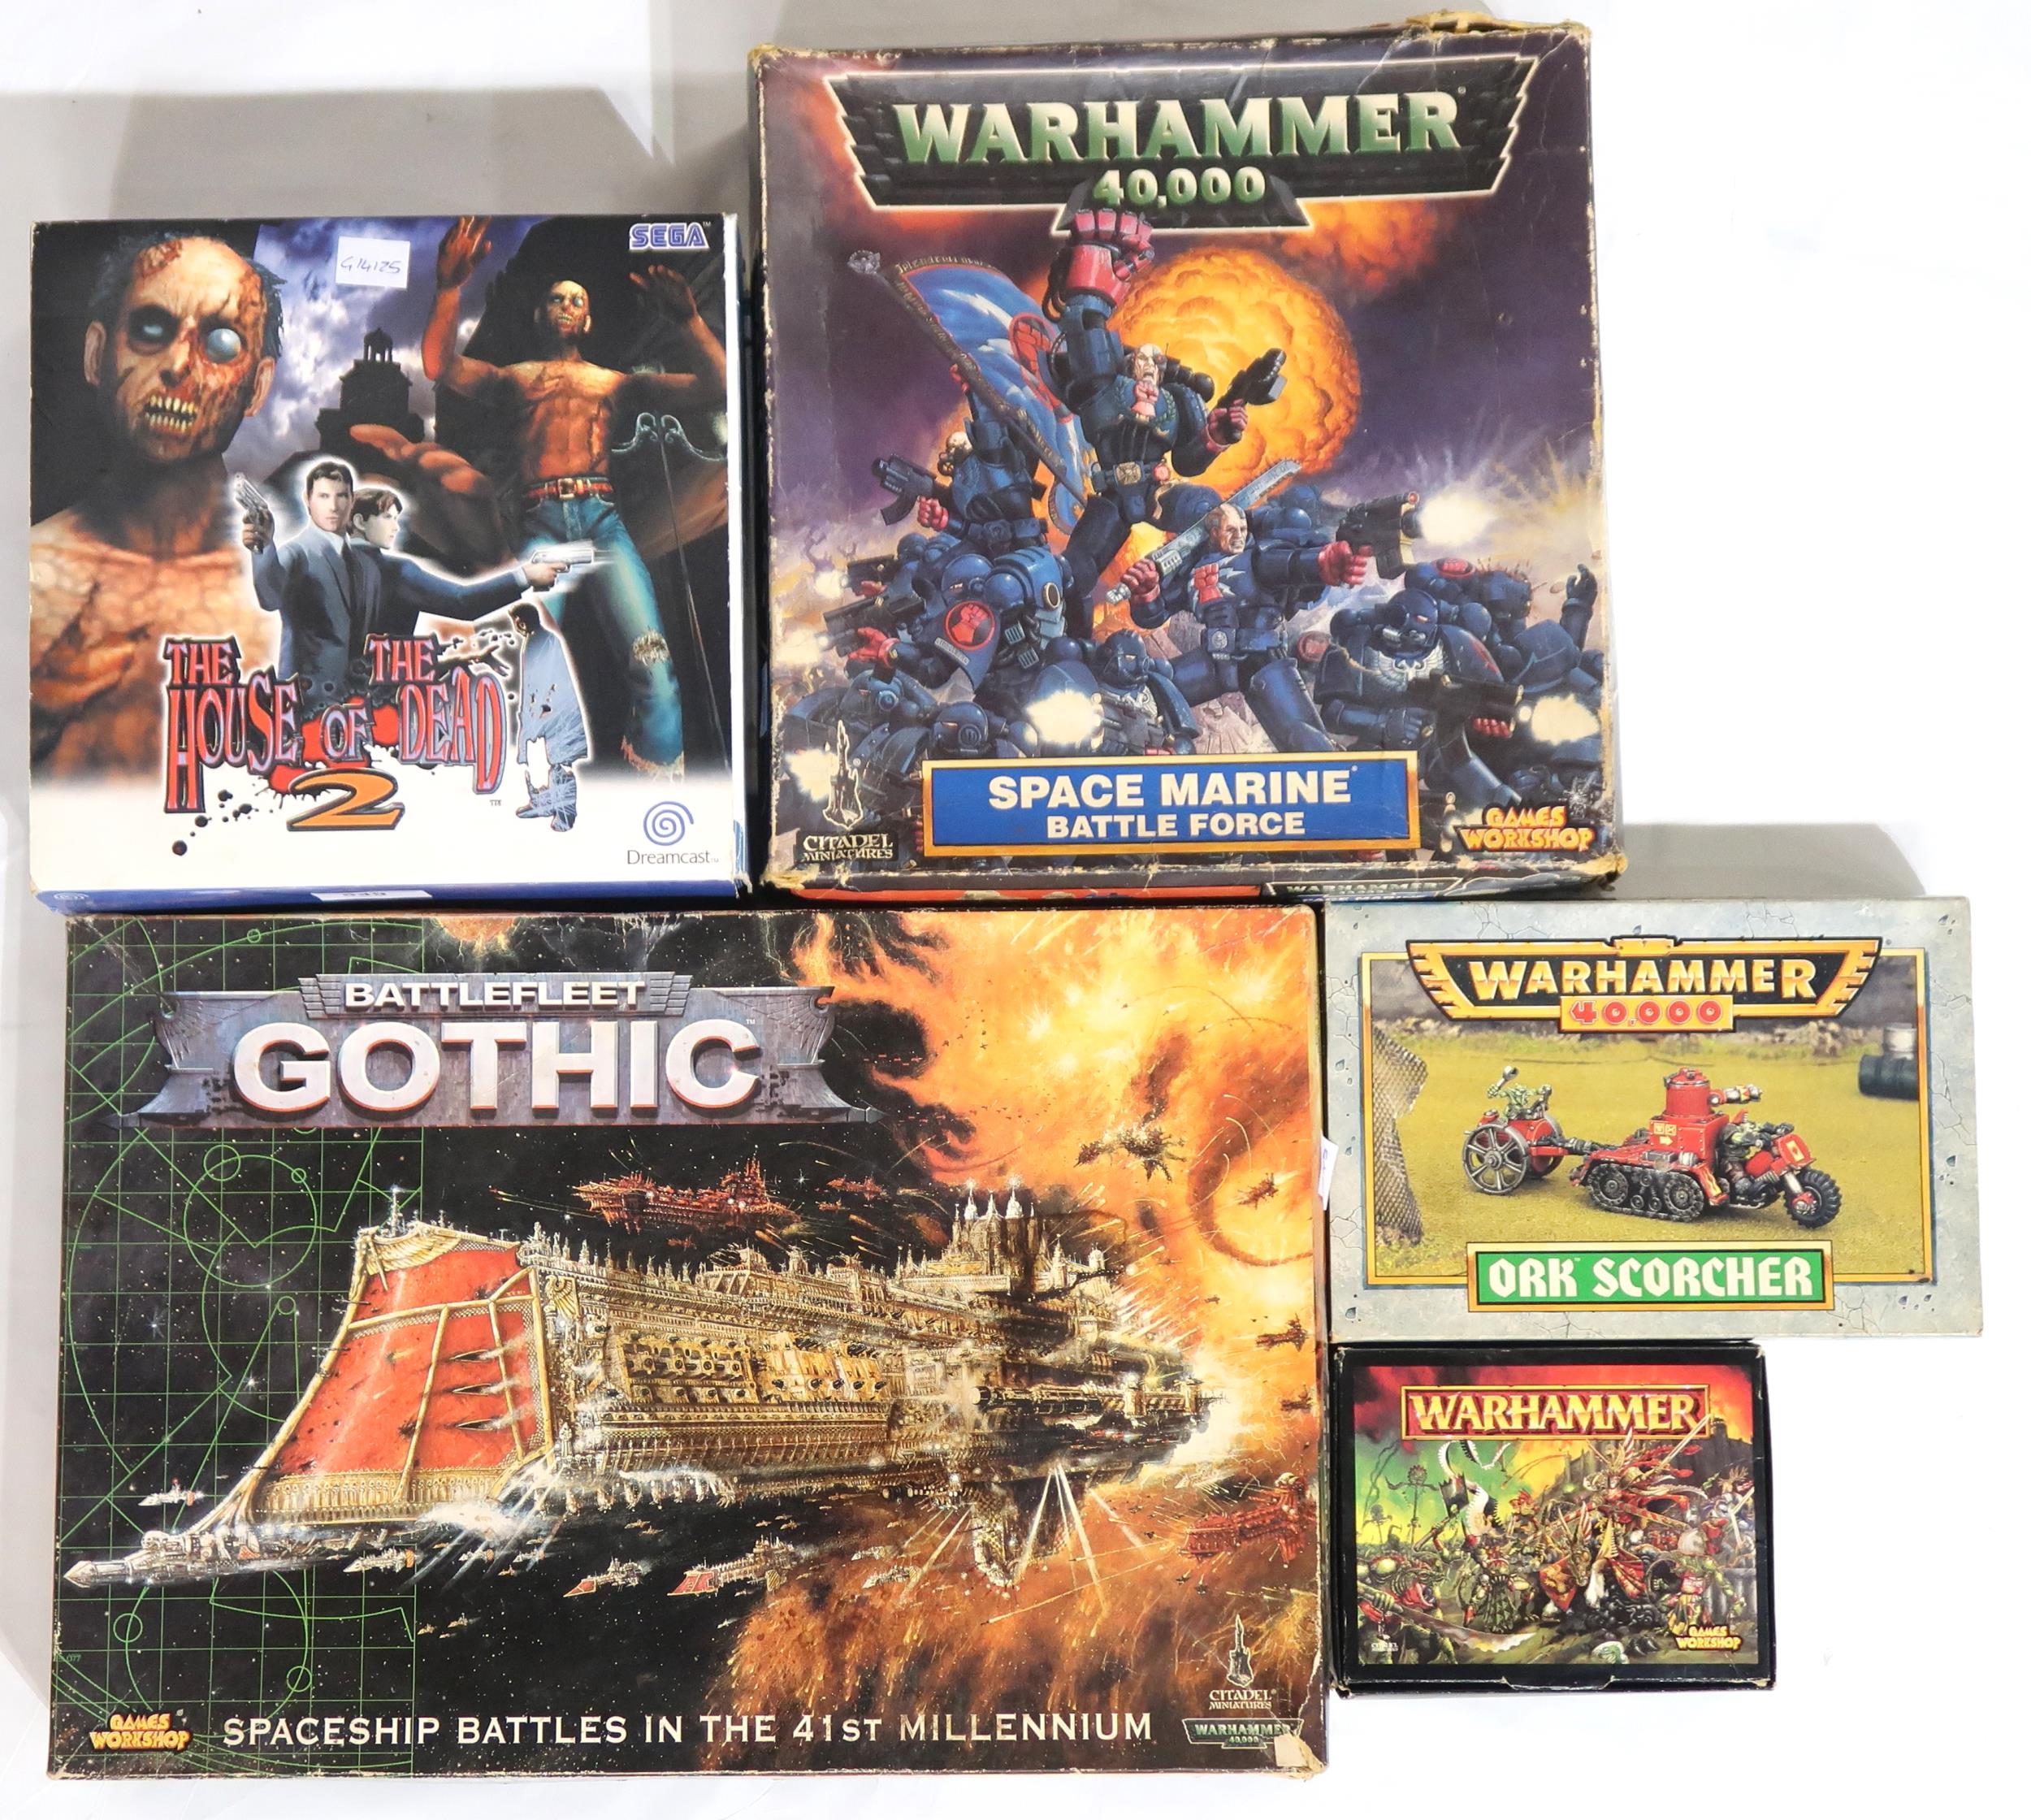 Boxed Warhammer 40,000 Space Marine Battle Force and Ork Scorcher sets, a Games Workshop Battlefleet